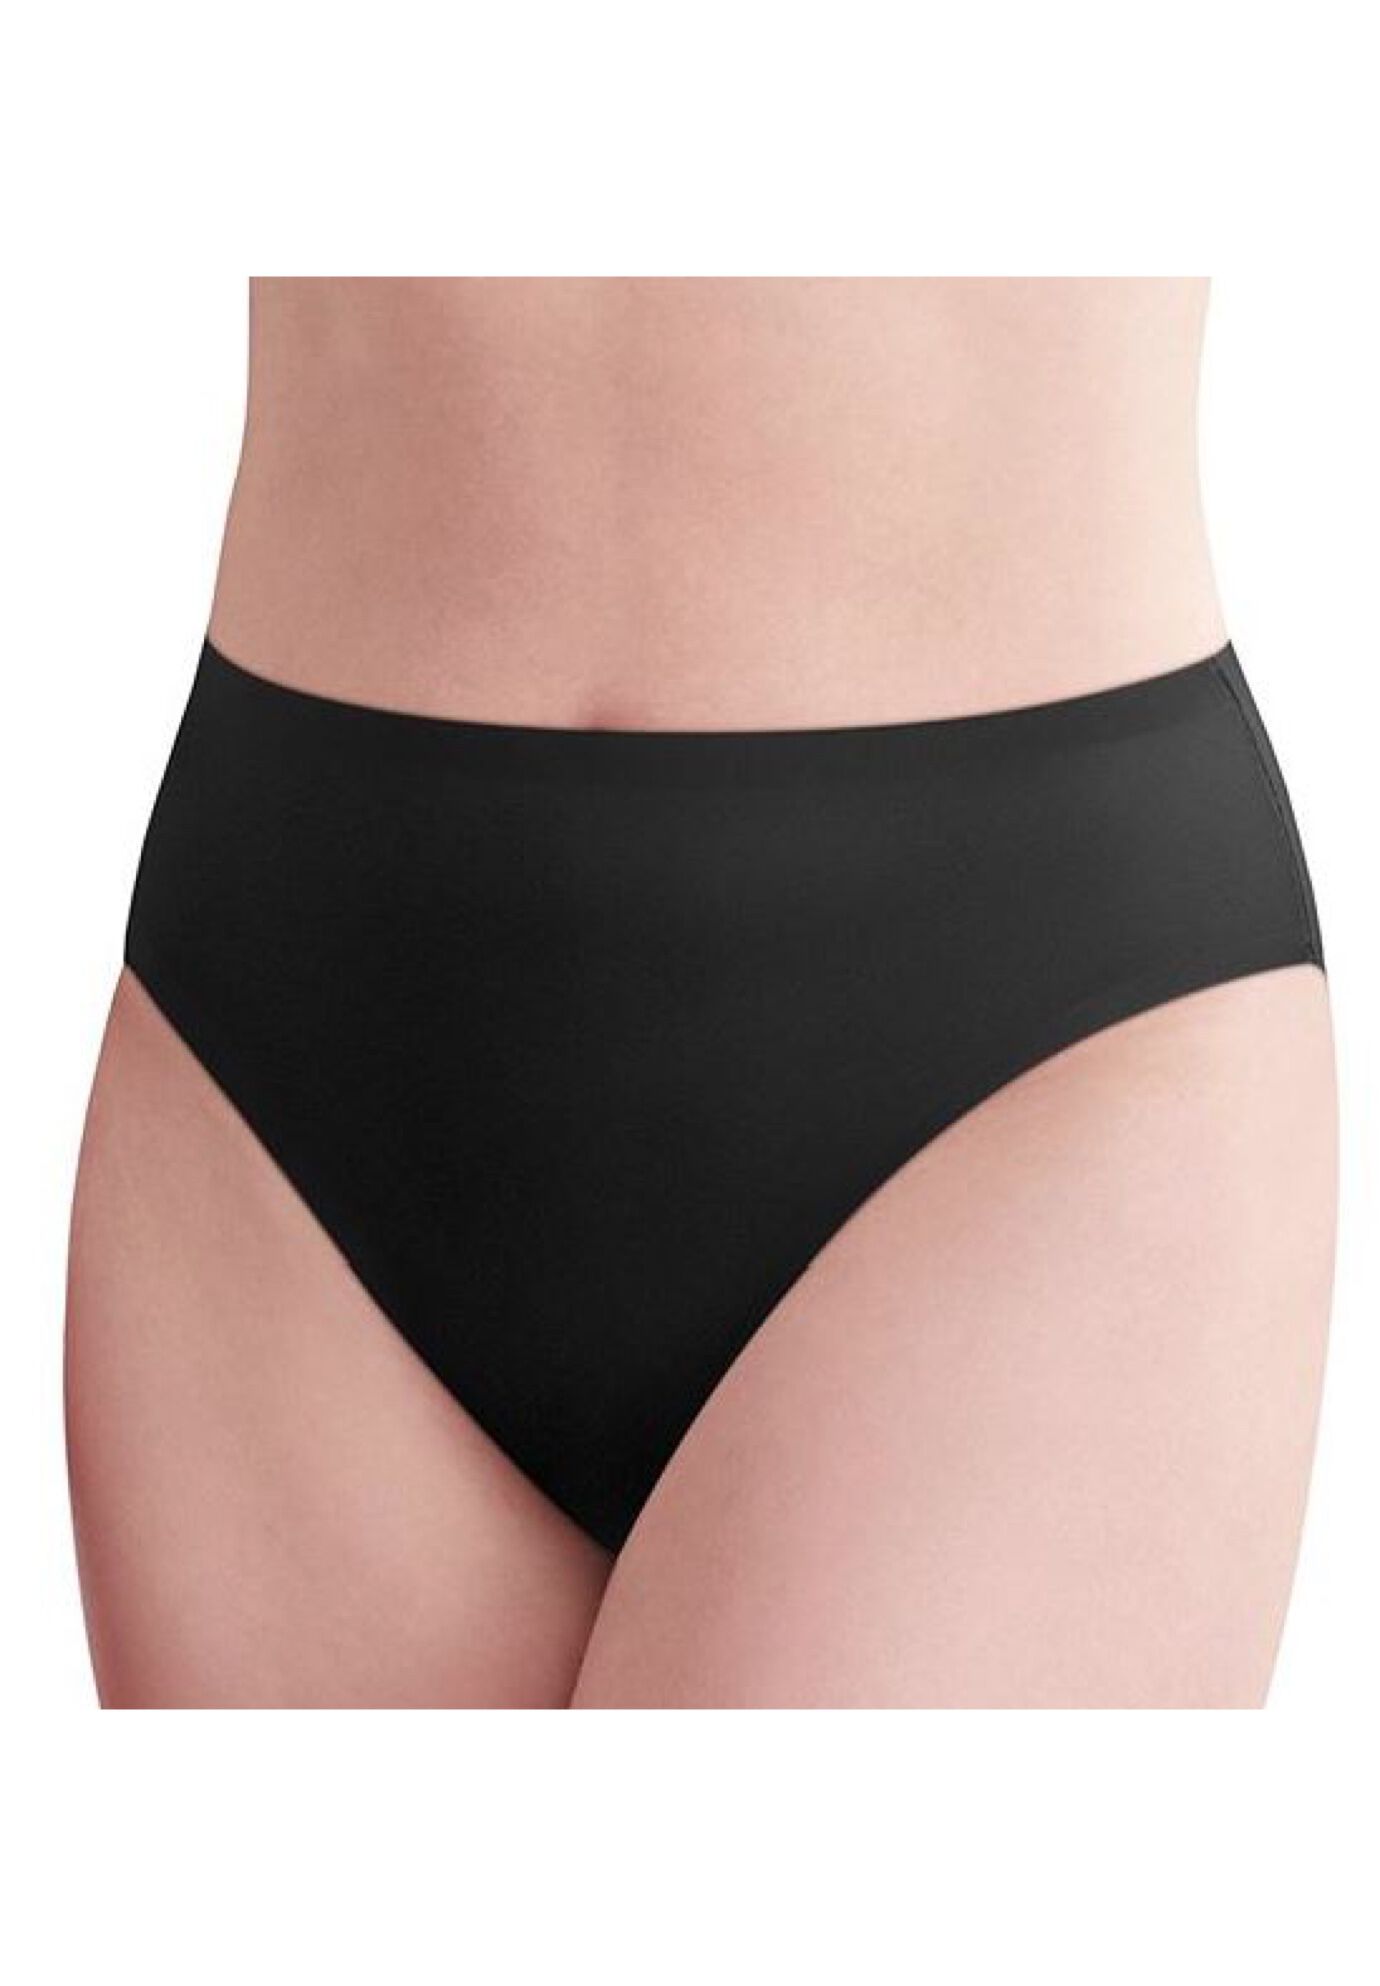 Plus Size Women's Comfort Revolution EasyLite&#8482; Hi Cut Panty by Bali in Black (Size 6)